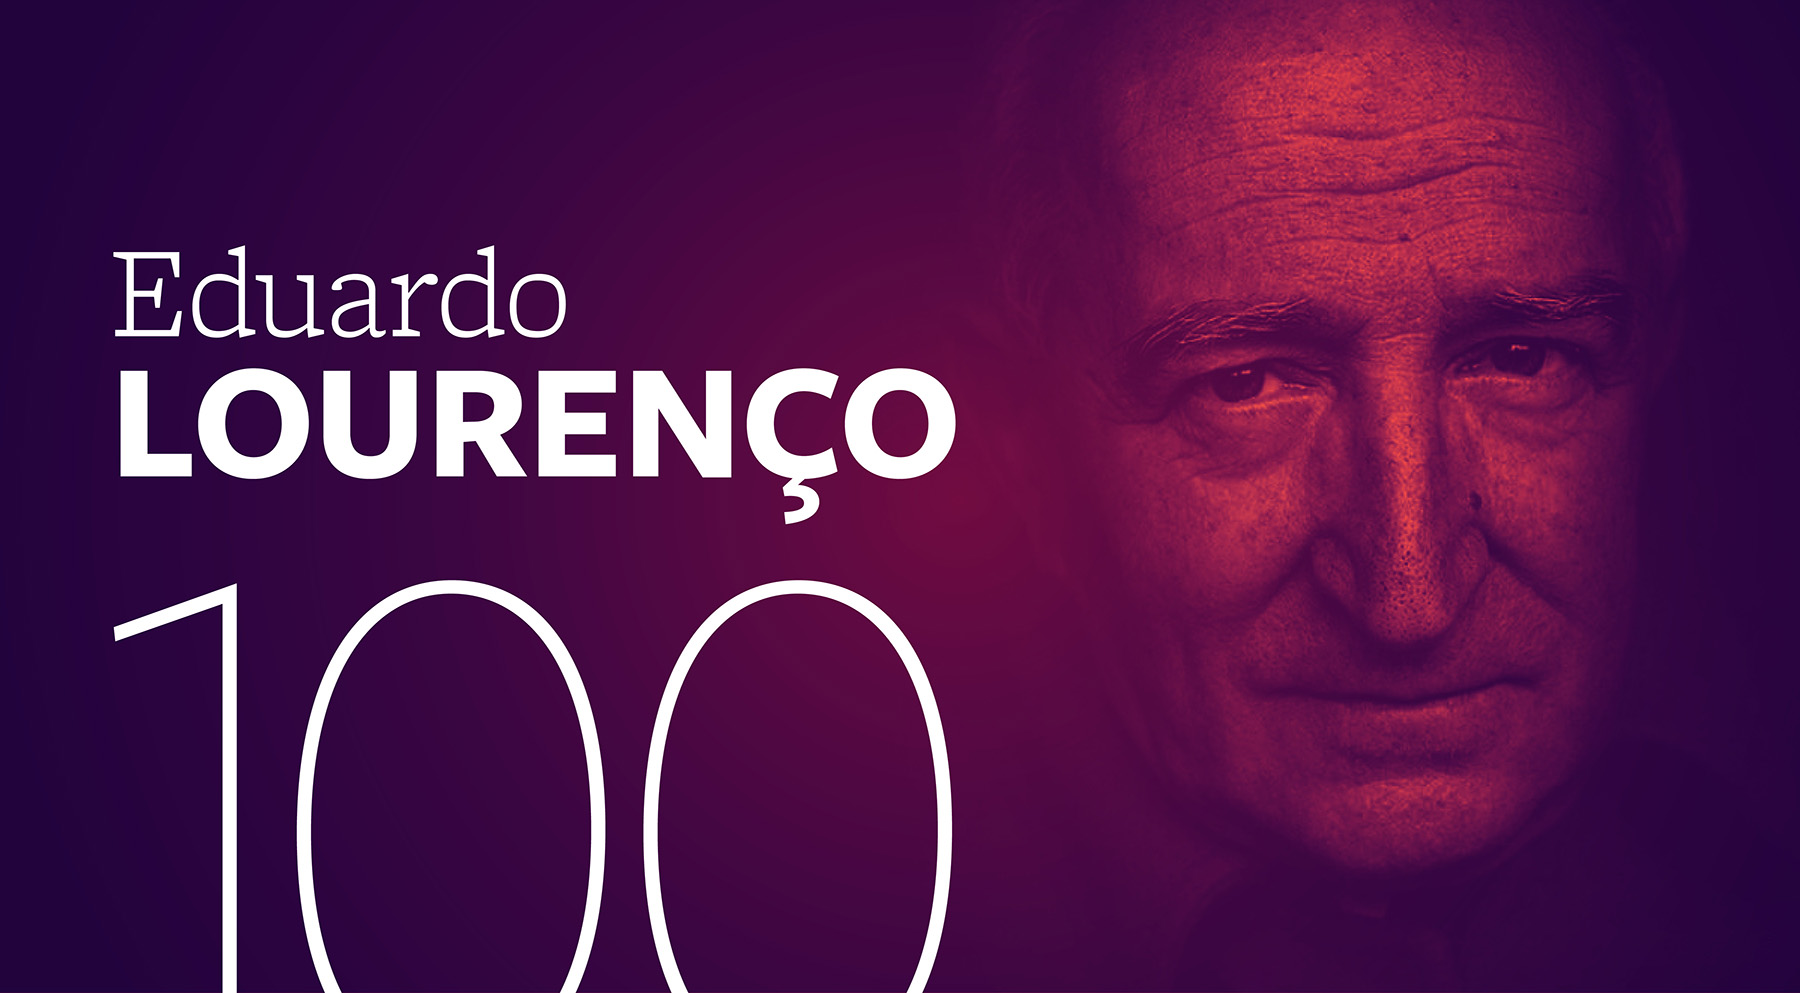 Eduardo Lourenço 100